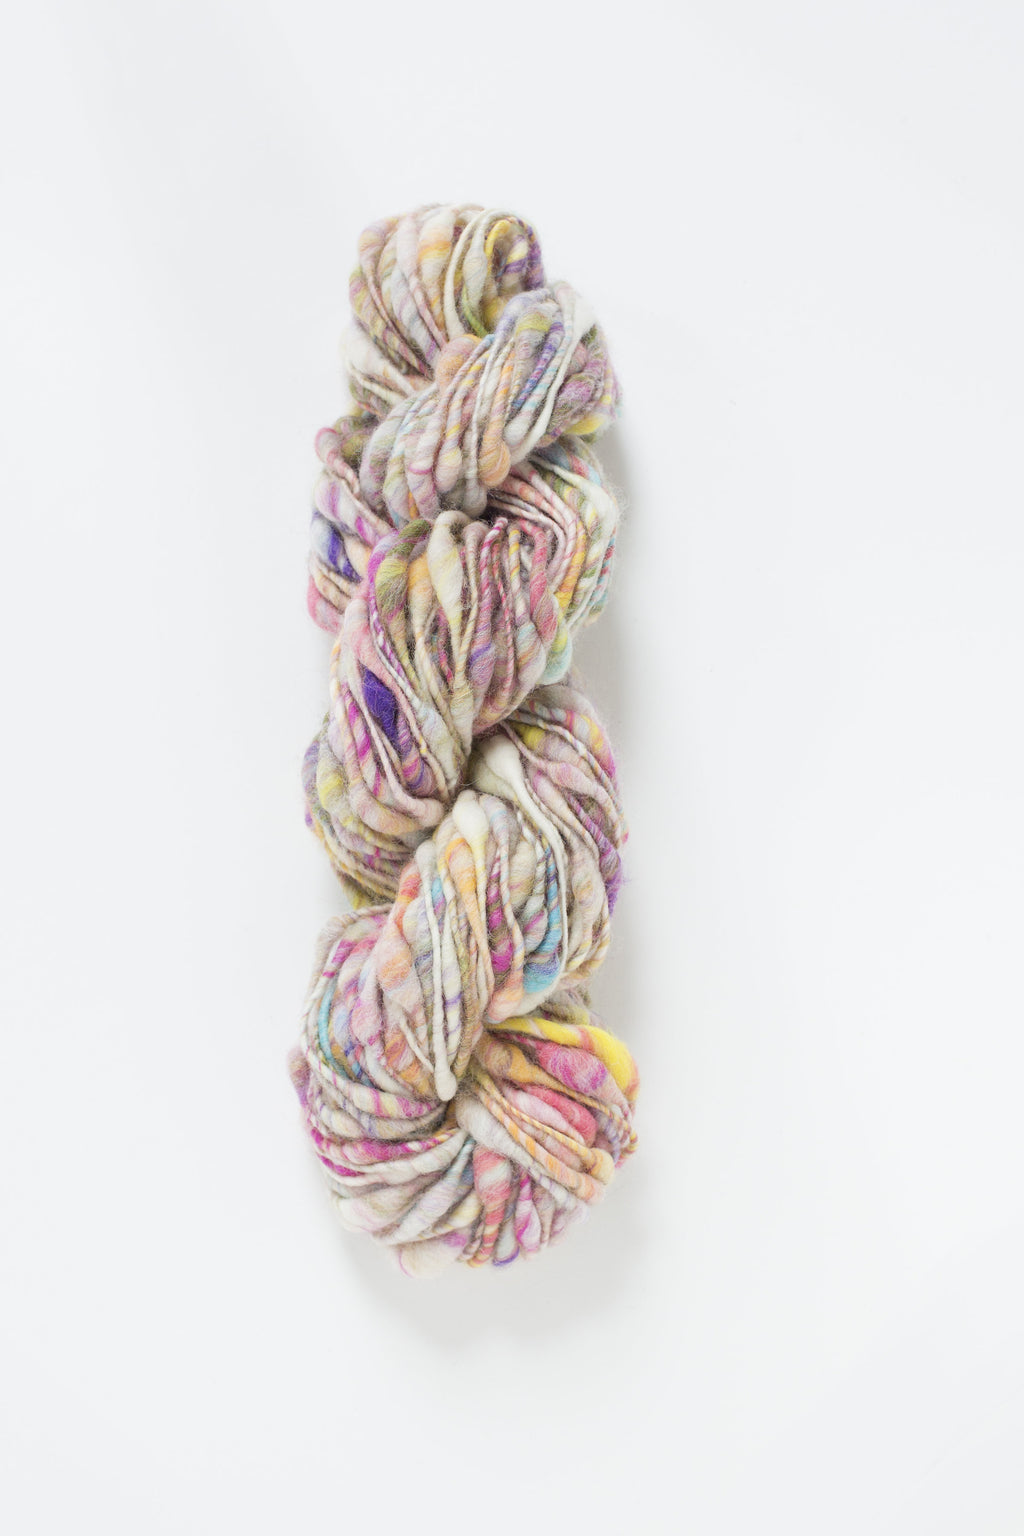 Cast Away Yarn hand knitting yarn - chunky bulky handspun yarn in Prism